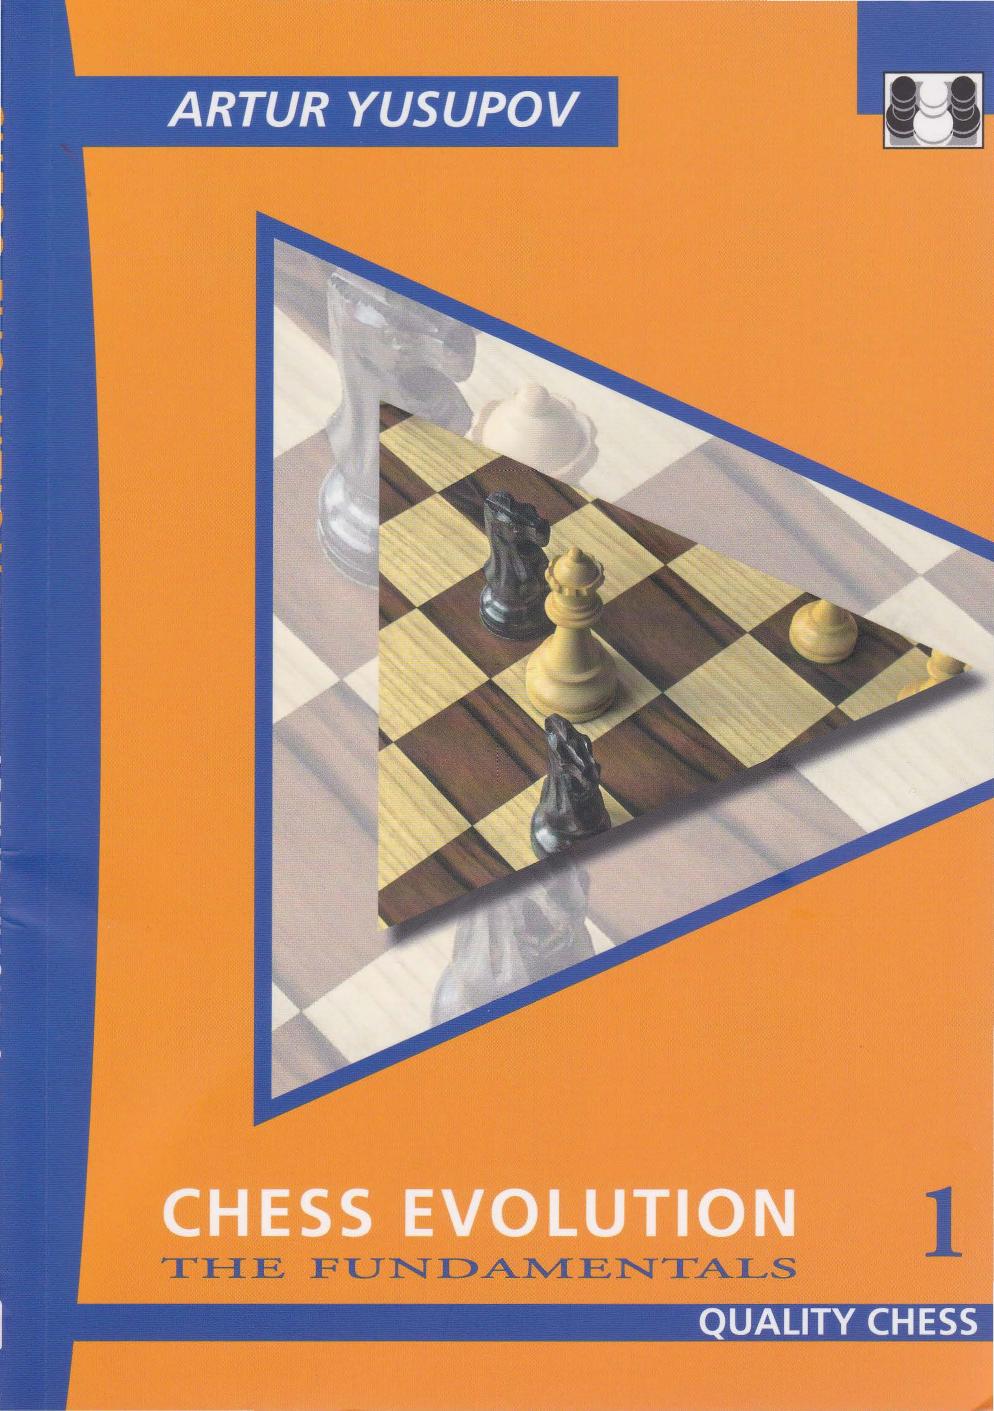 Chess Evolution 1 - The Fundamentals by Arthur Yususpov